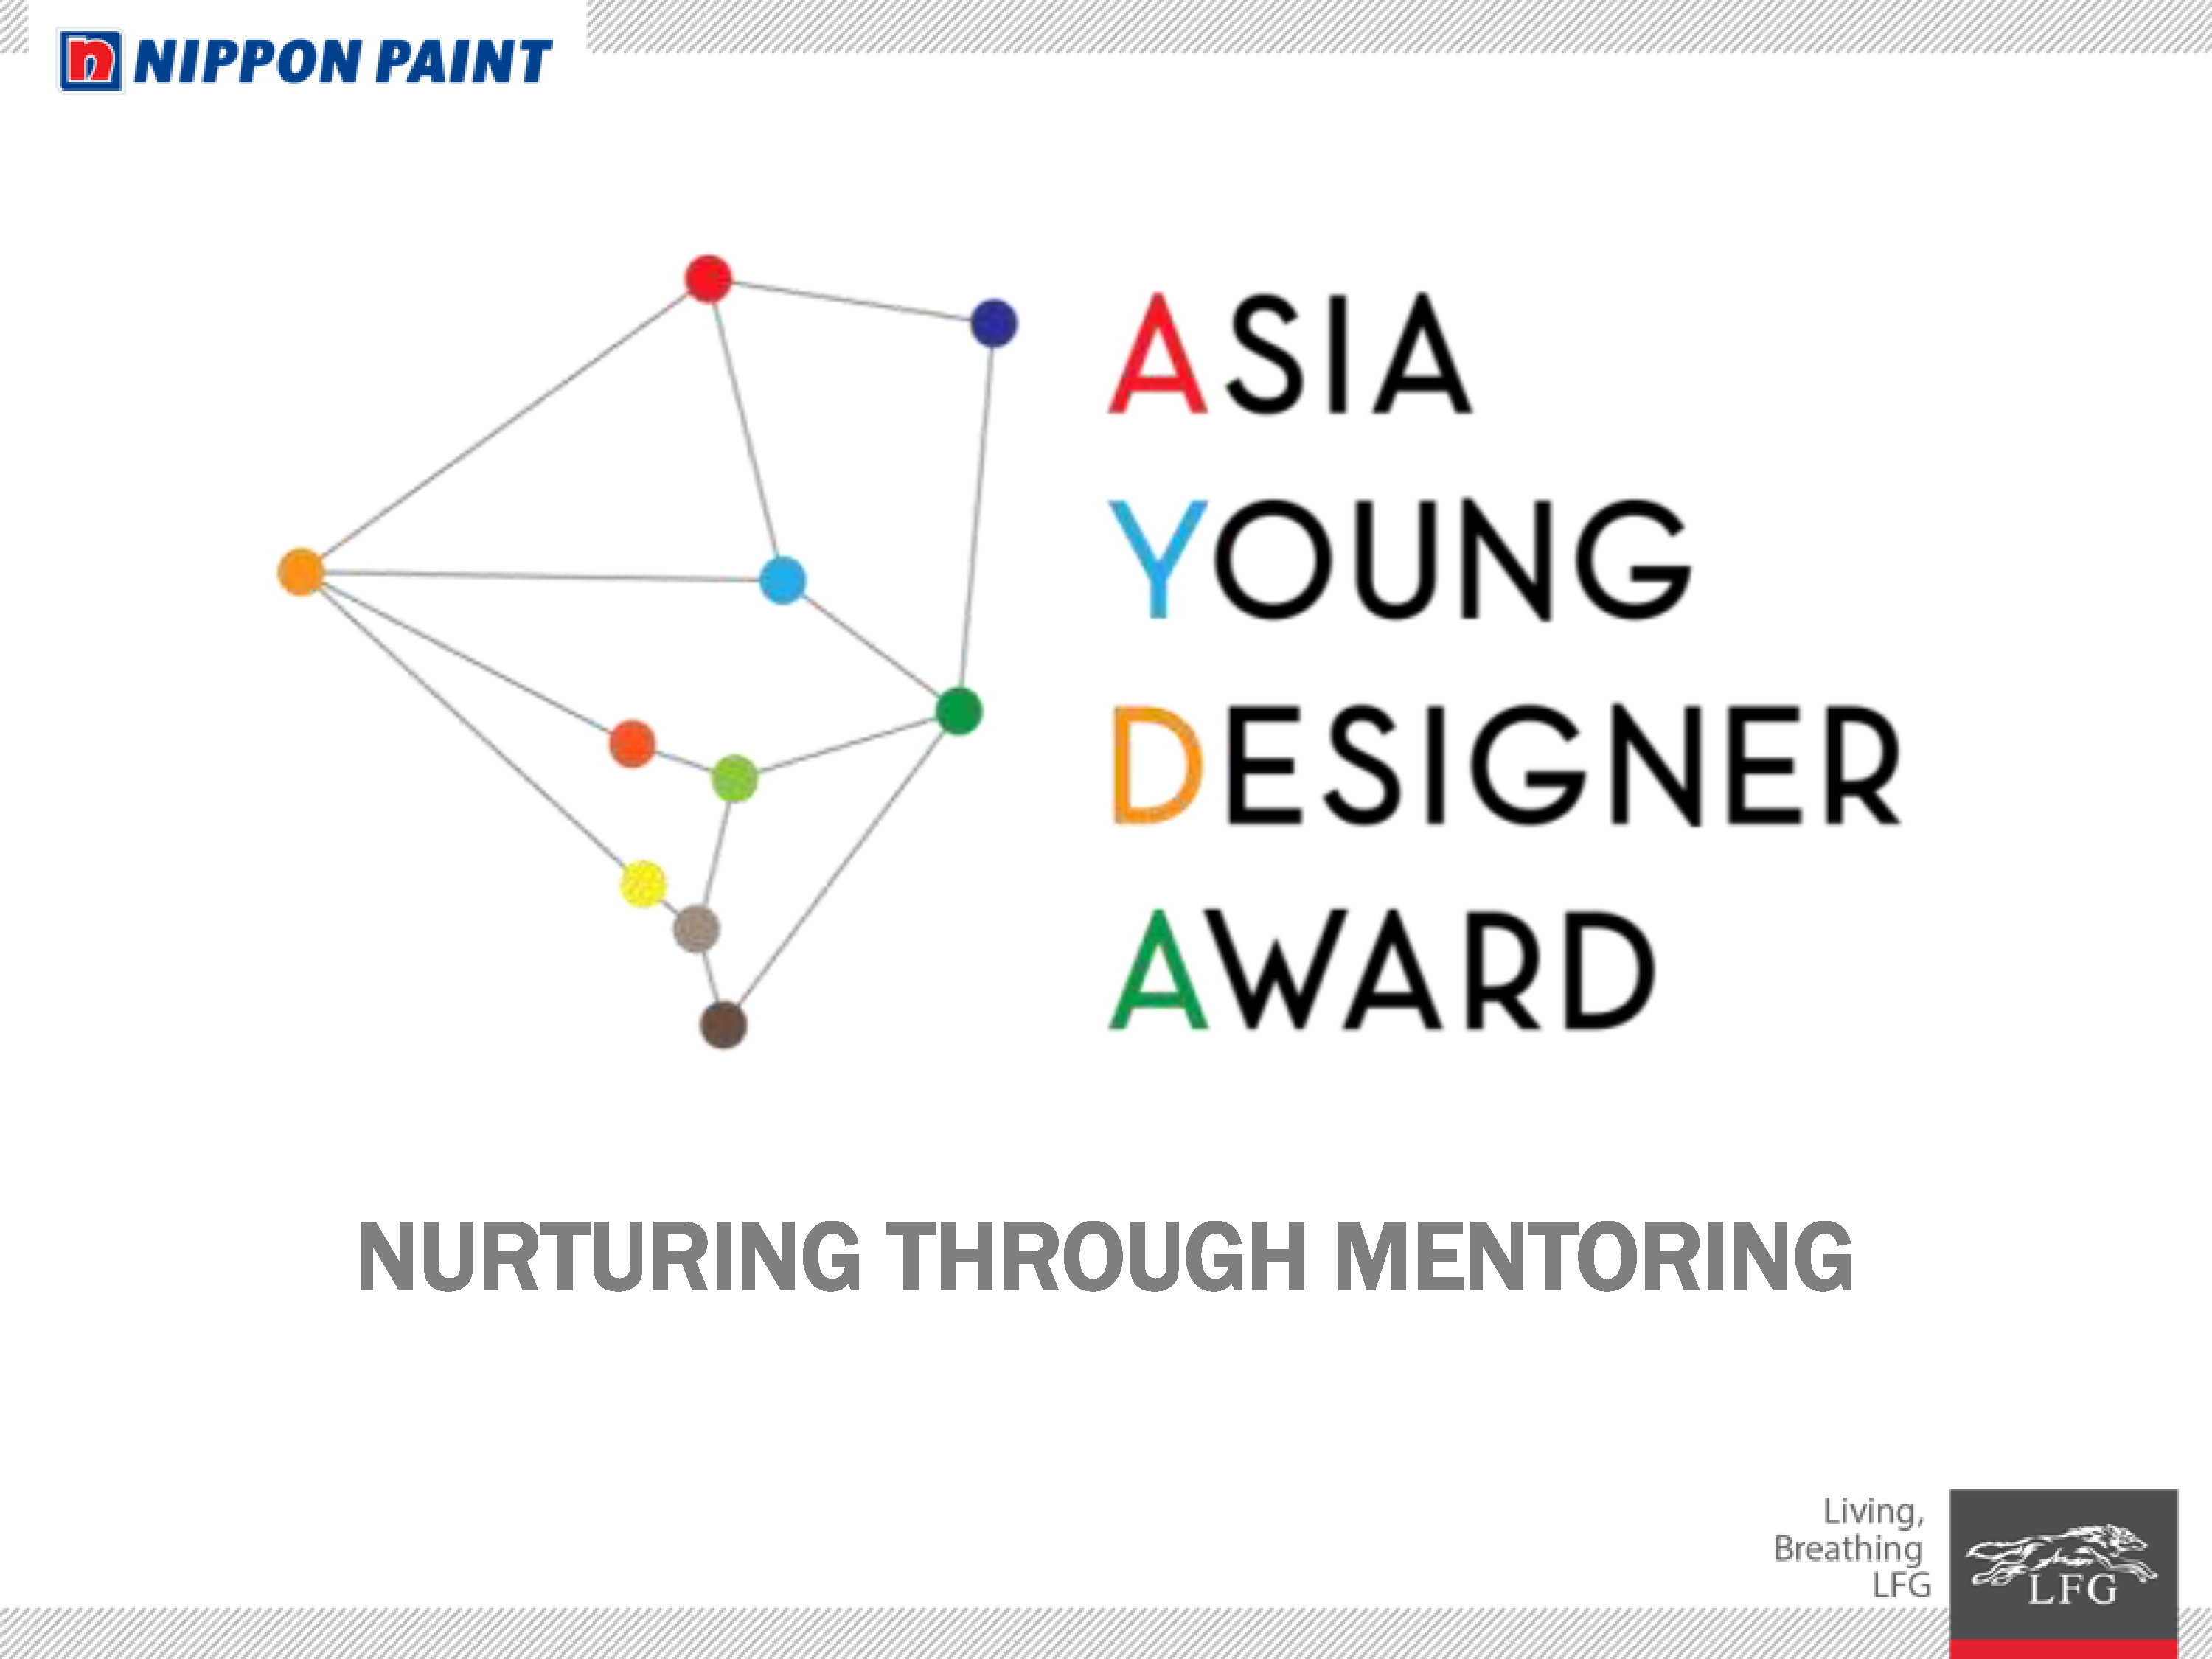 Asia Young Designer Award 2017